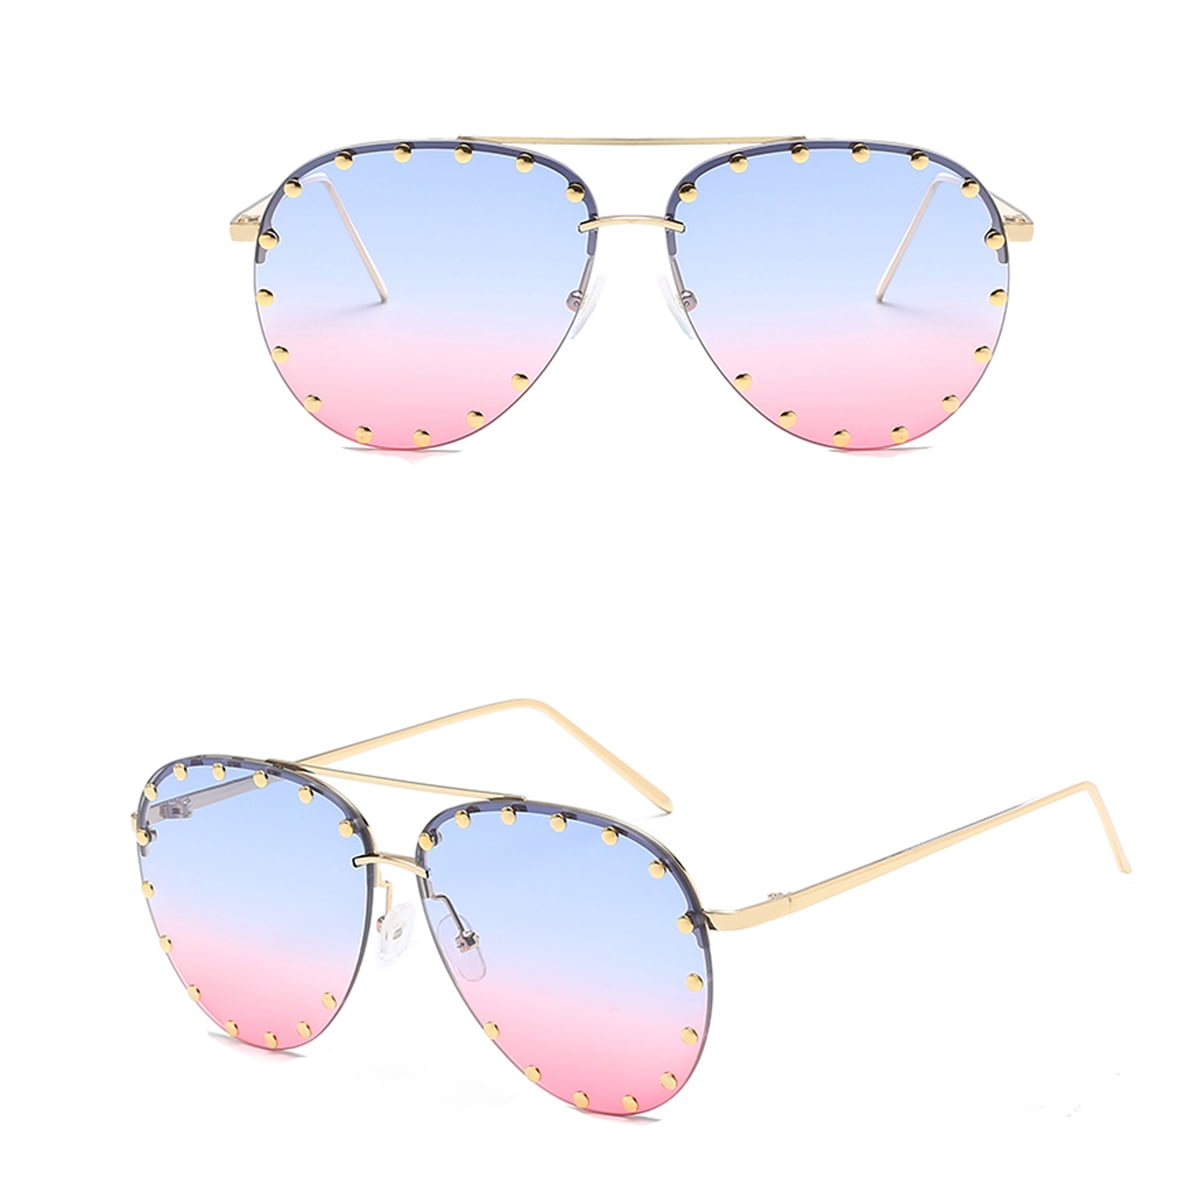 Fashion Culture Affair Studded Aviator Sunglasses Blue Pink Ombre Lens, 